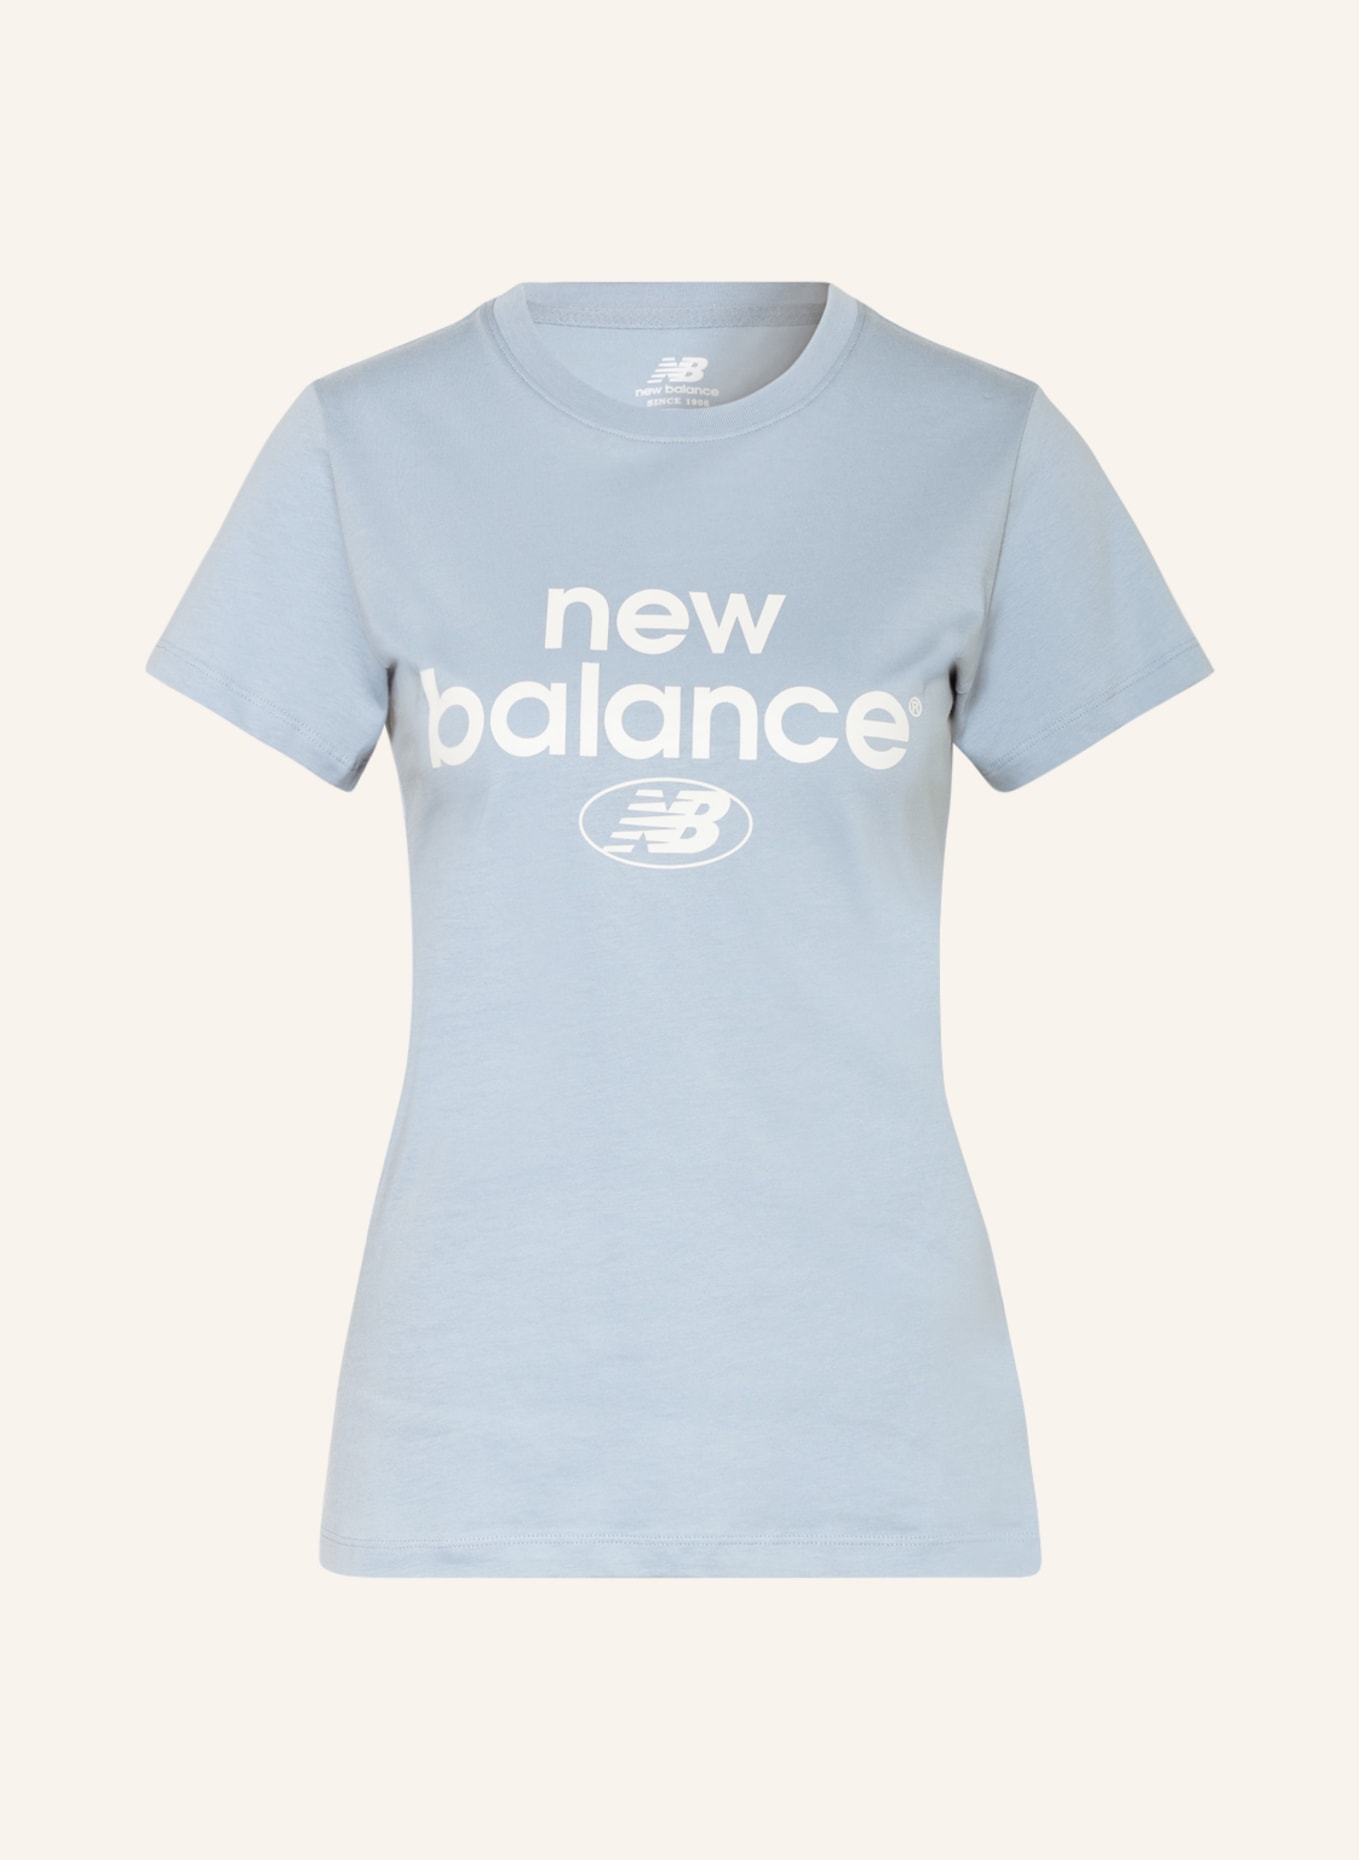 ESSENTIALS in light blue/ white T-shirt balance new